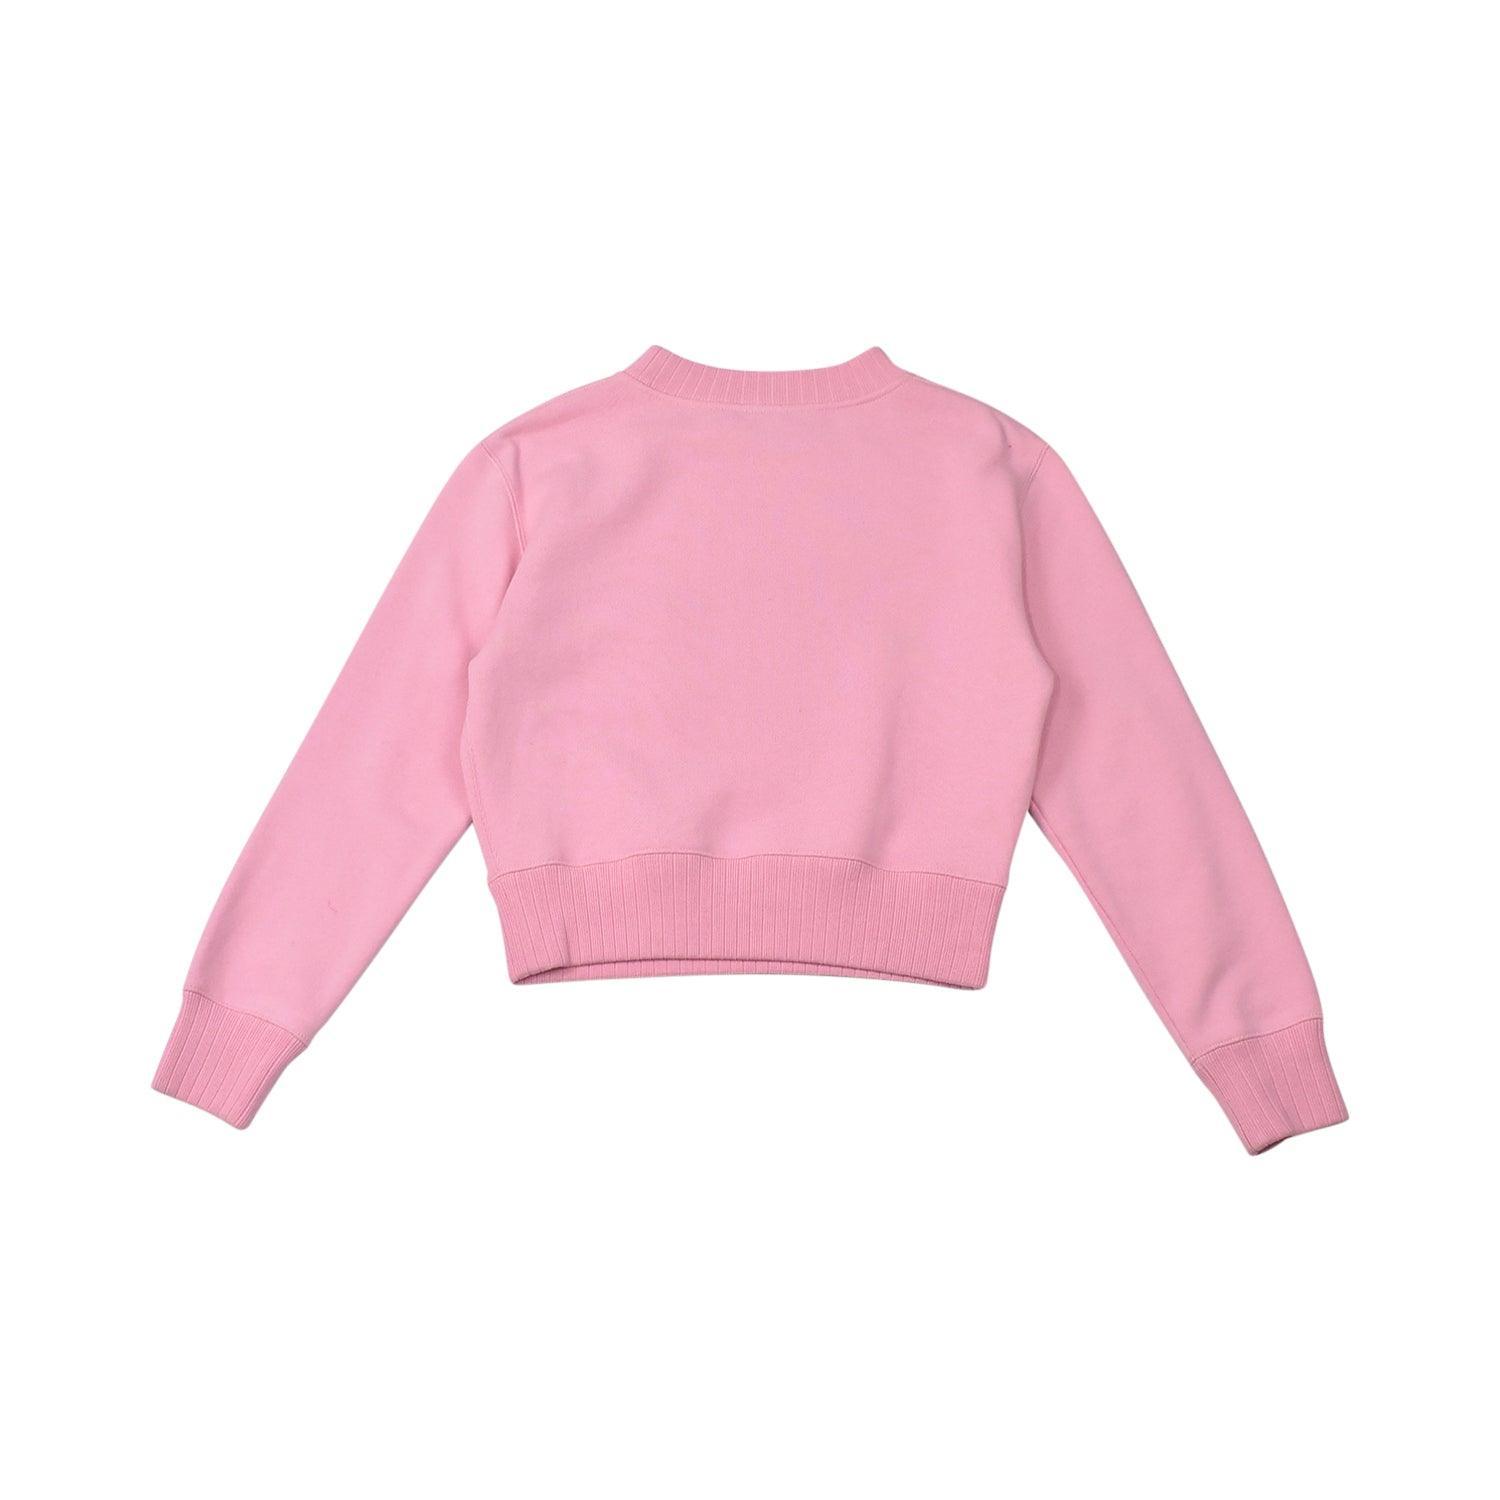 Gucci x Disney Sweater - Women's XS - Fashionably Yours